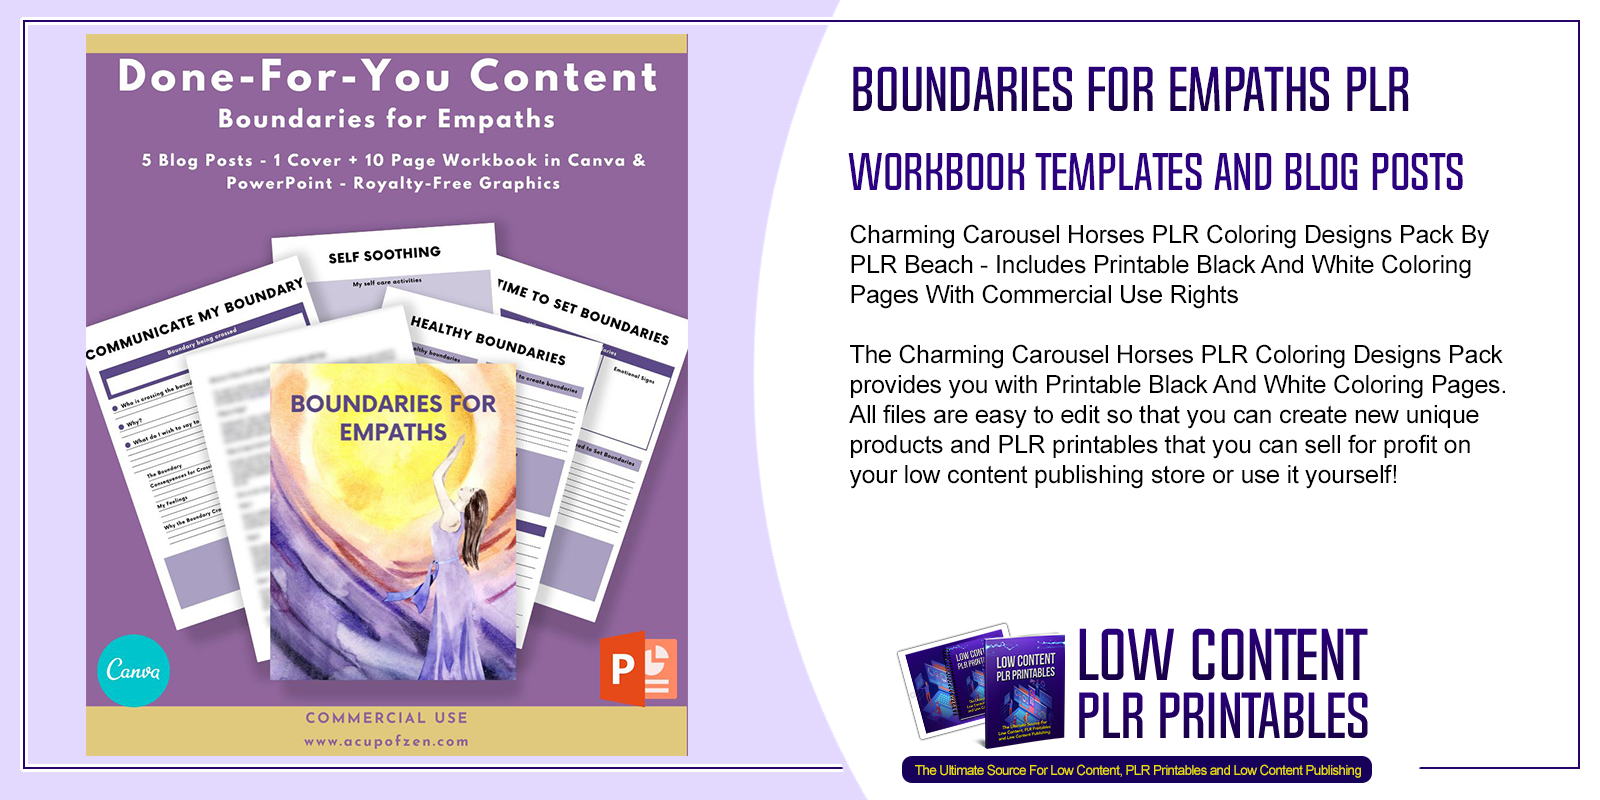 Boundaries for Empaths PLR Workbook Templates and Blog Posts